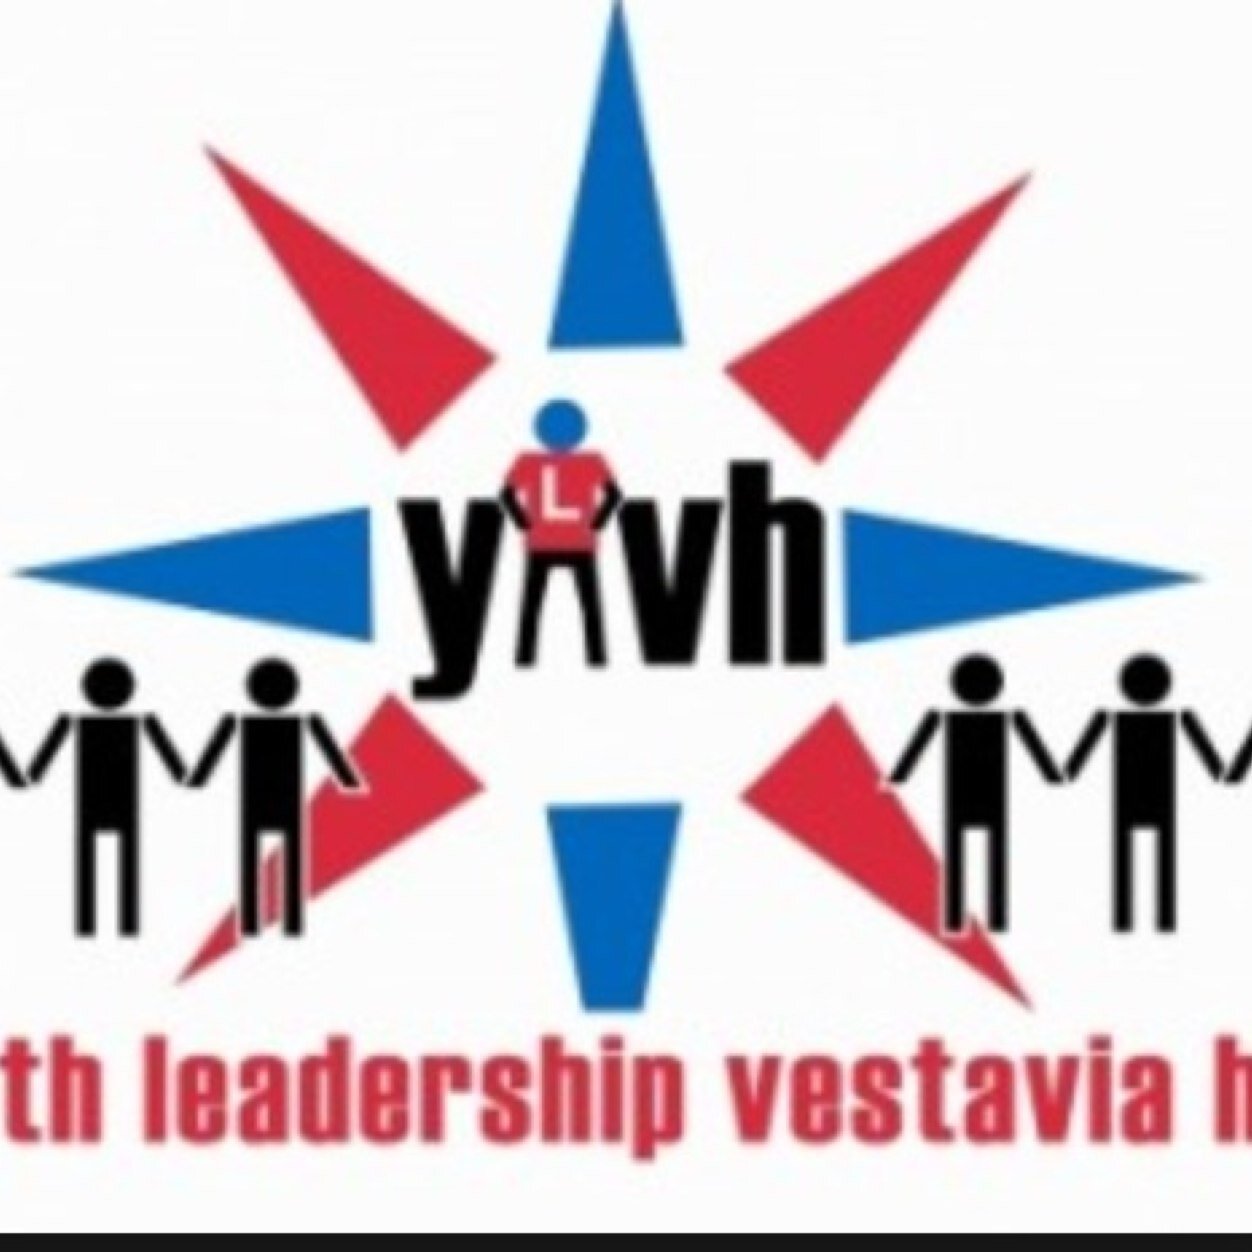 Youth Leadership